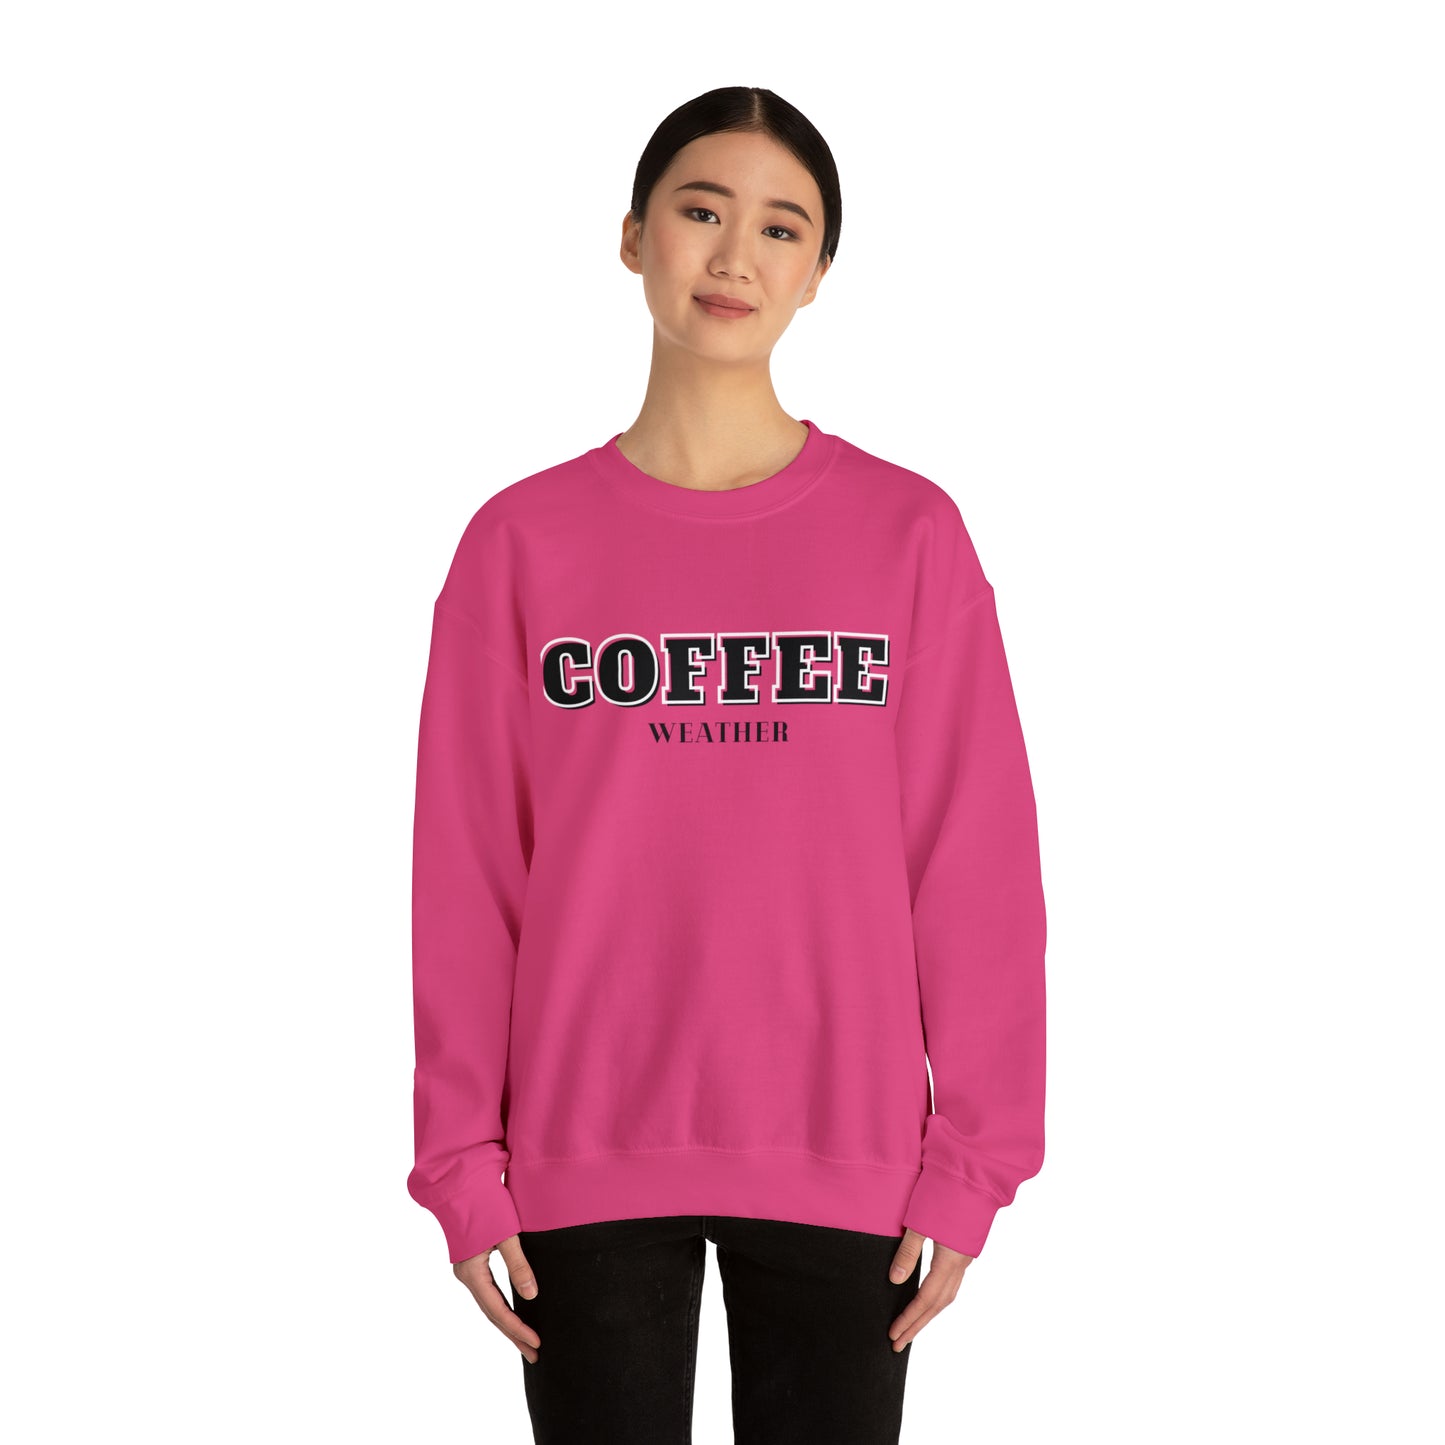 Coffee Weather Unisex Heavy Blend Crewneck Sweatshirt